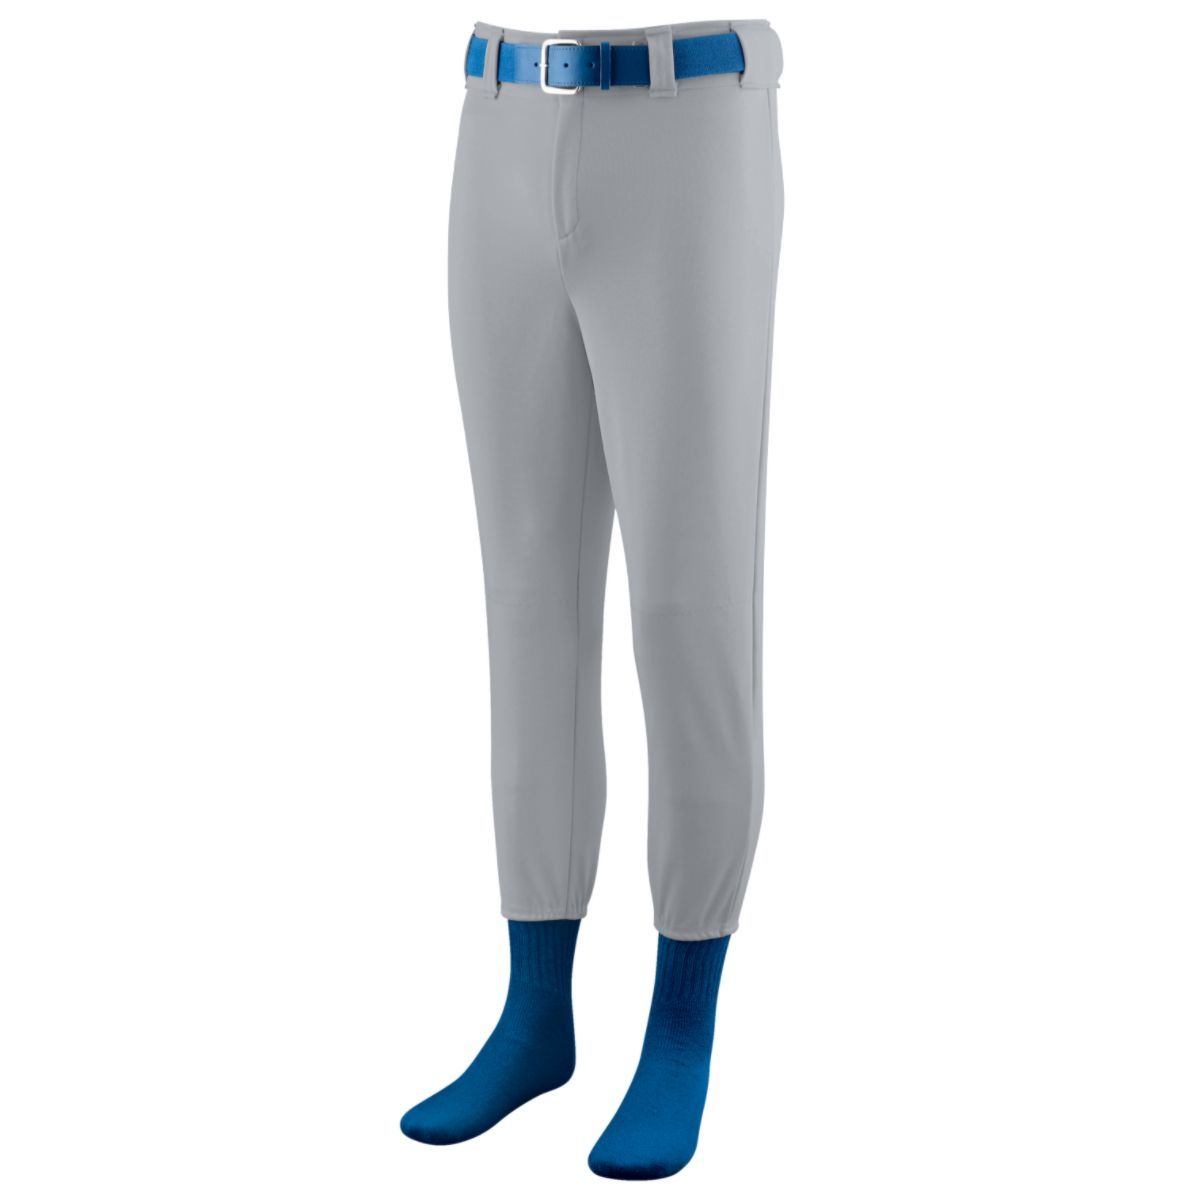 Augusta Jeunesse Softball/Baseball Pantalon Bleu Marine 